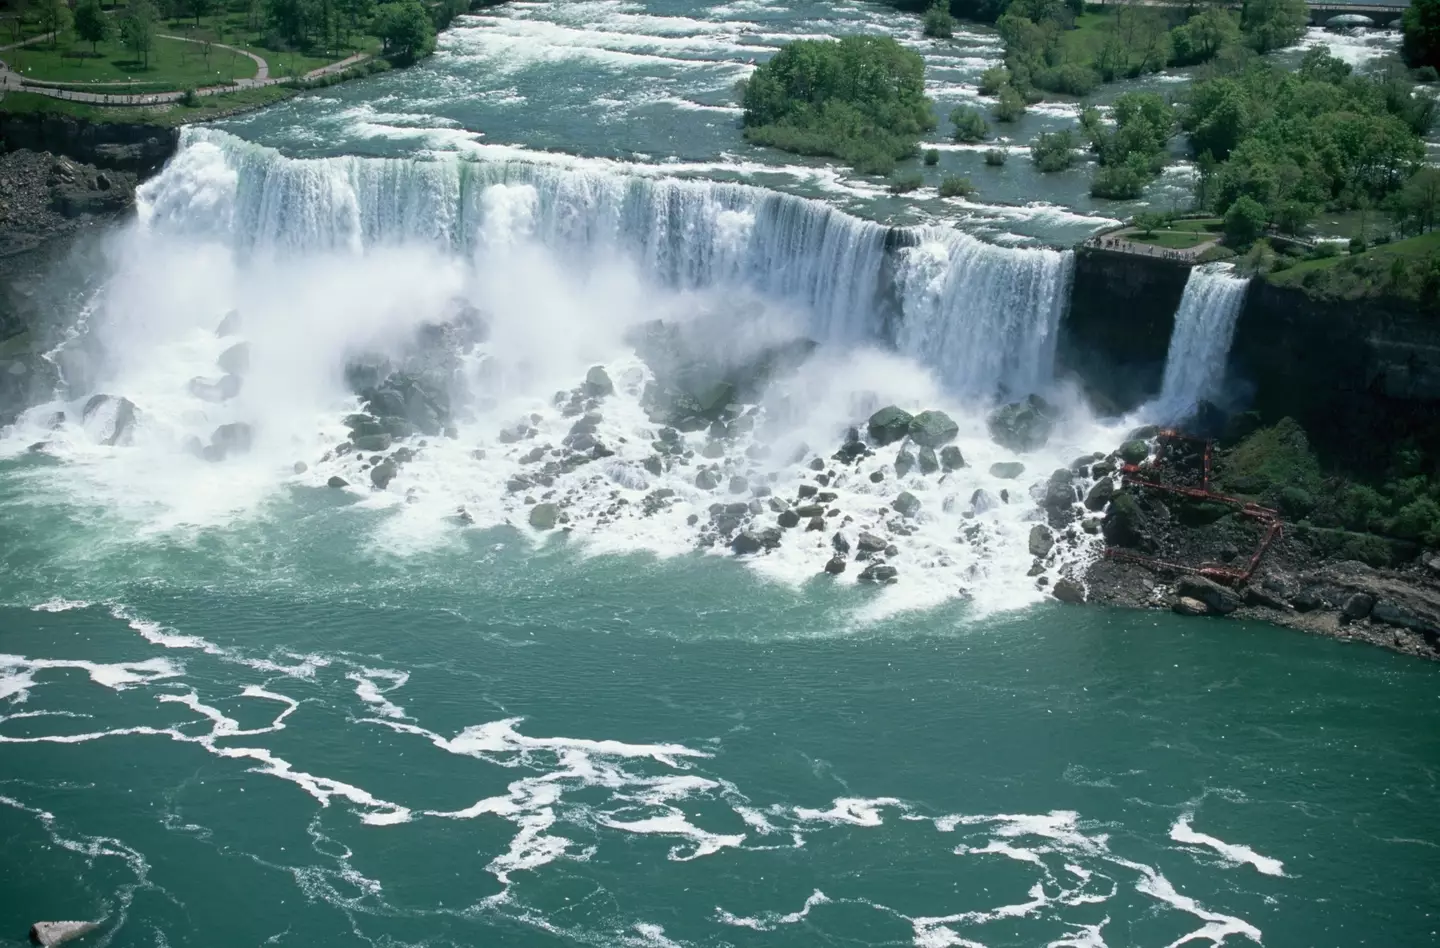 It's not Niagara Falls.